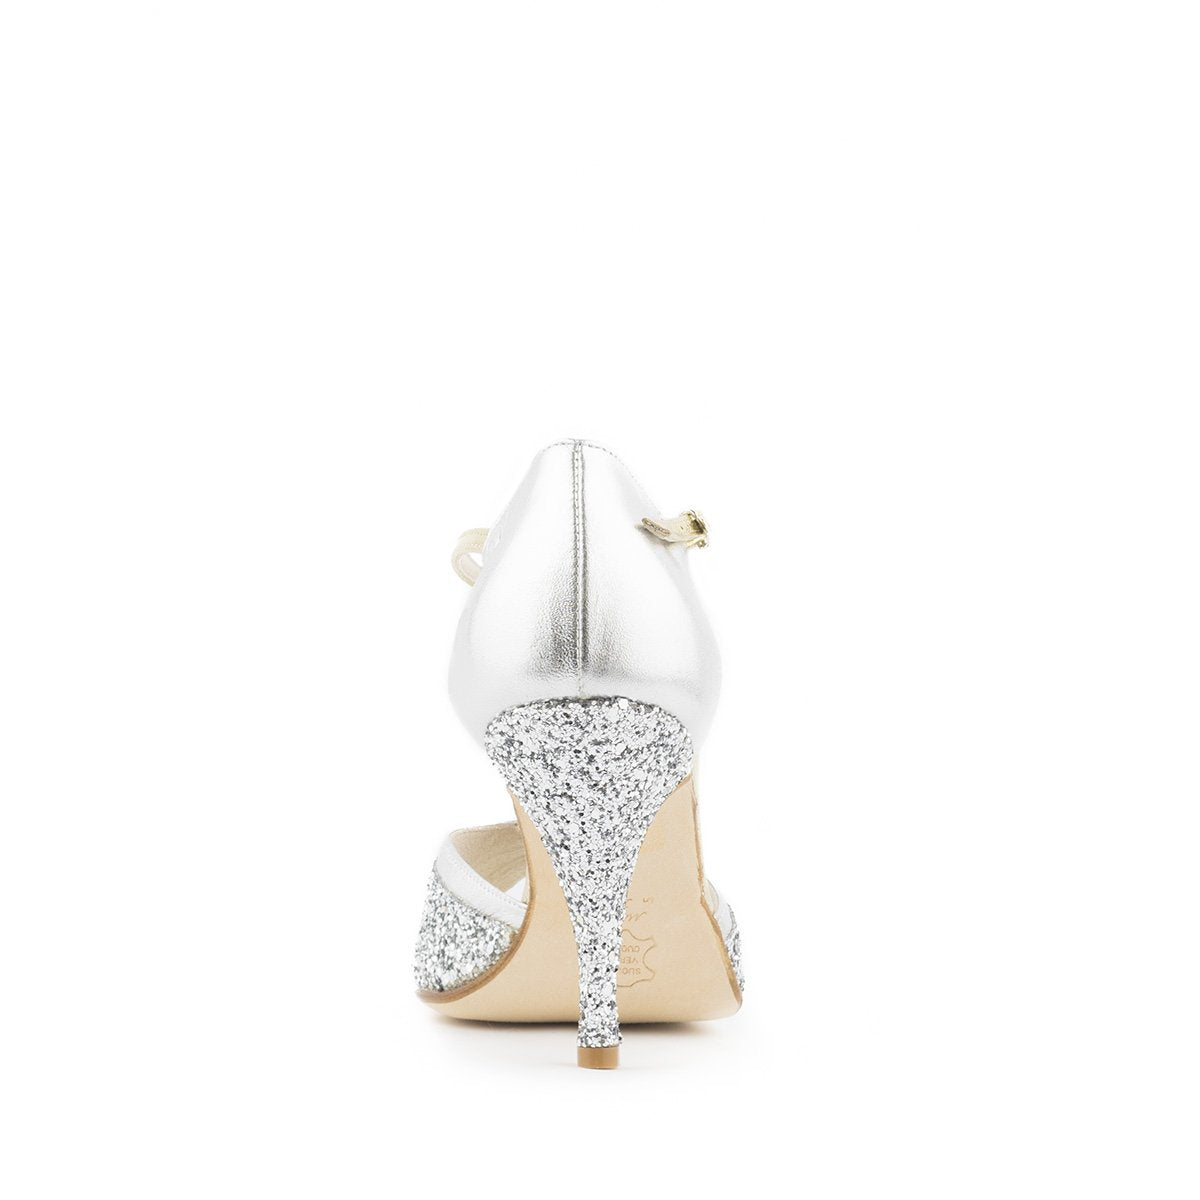 Women's dance shoe with stiletto heel